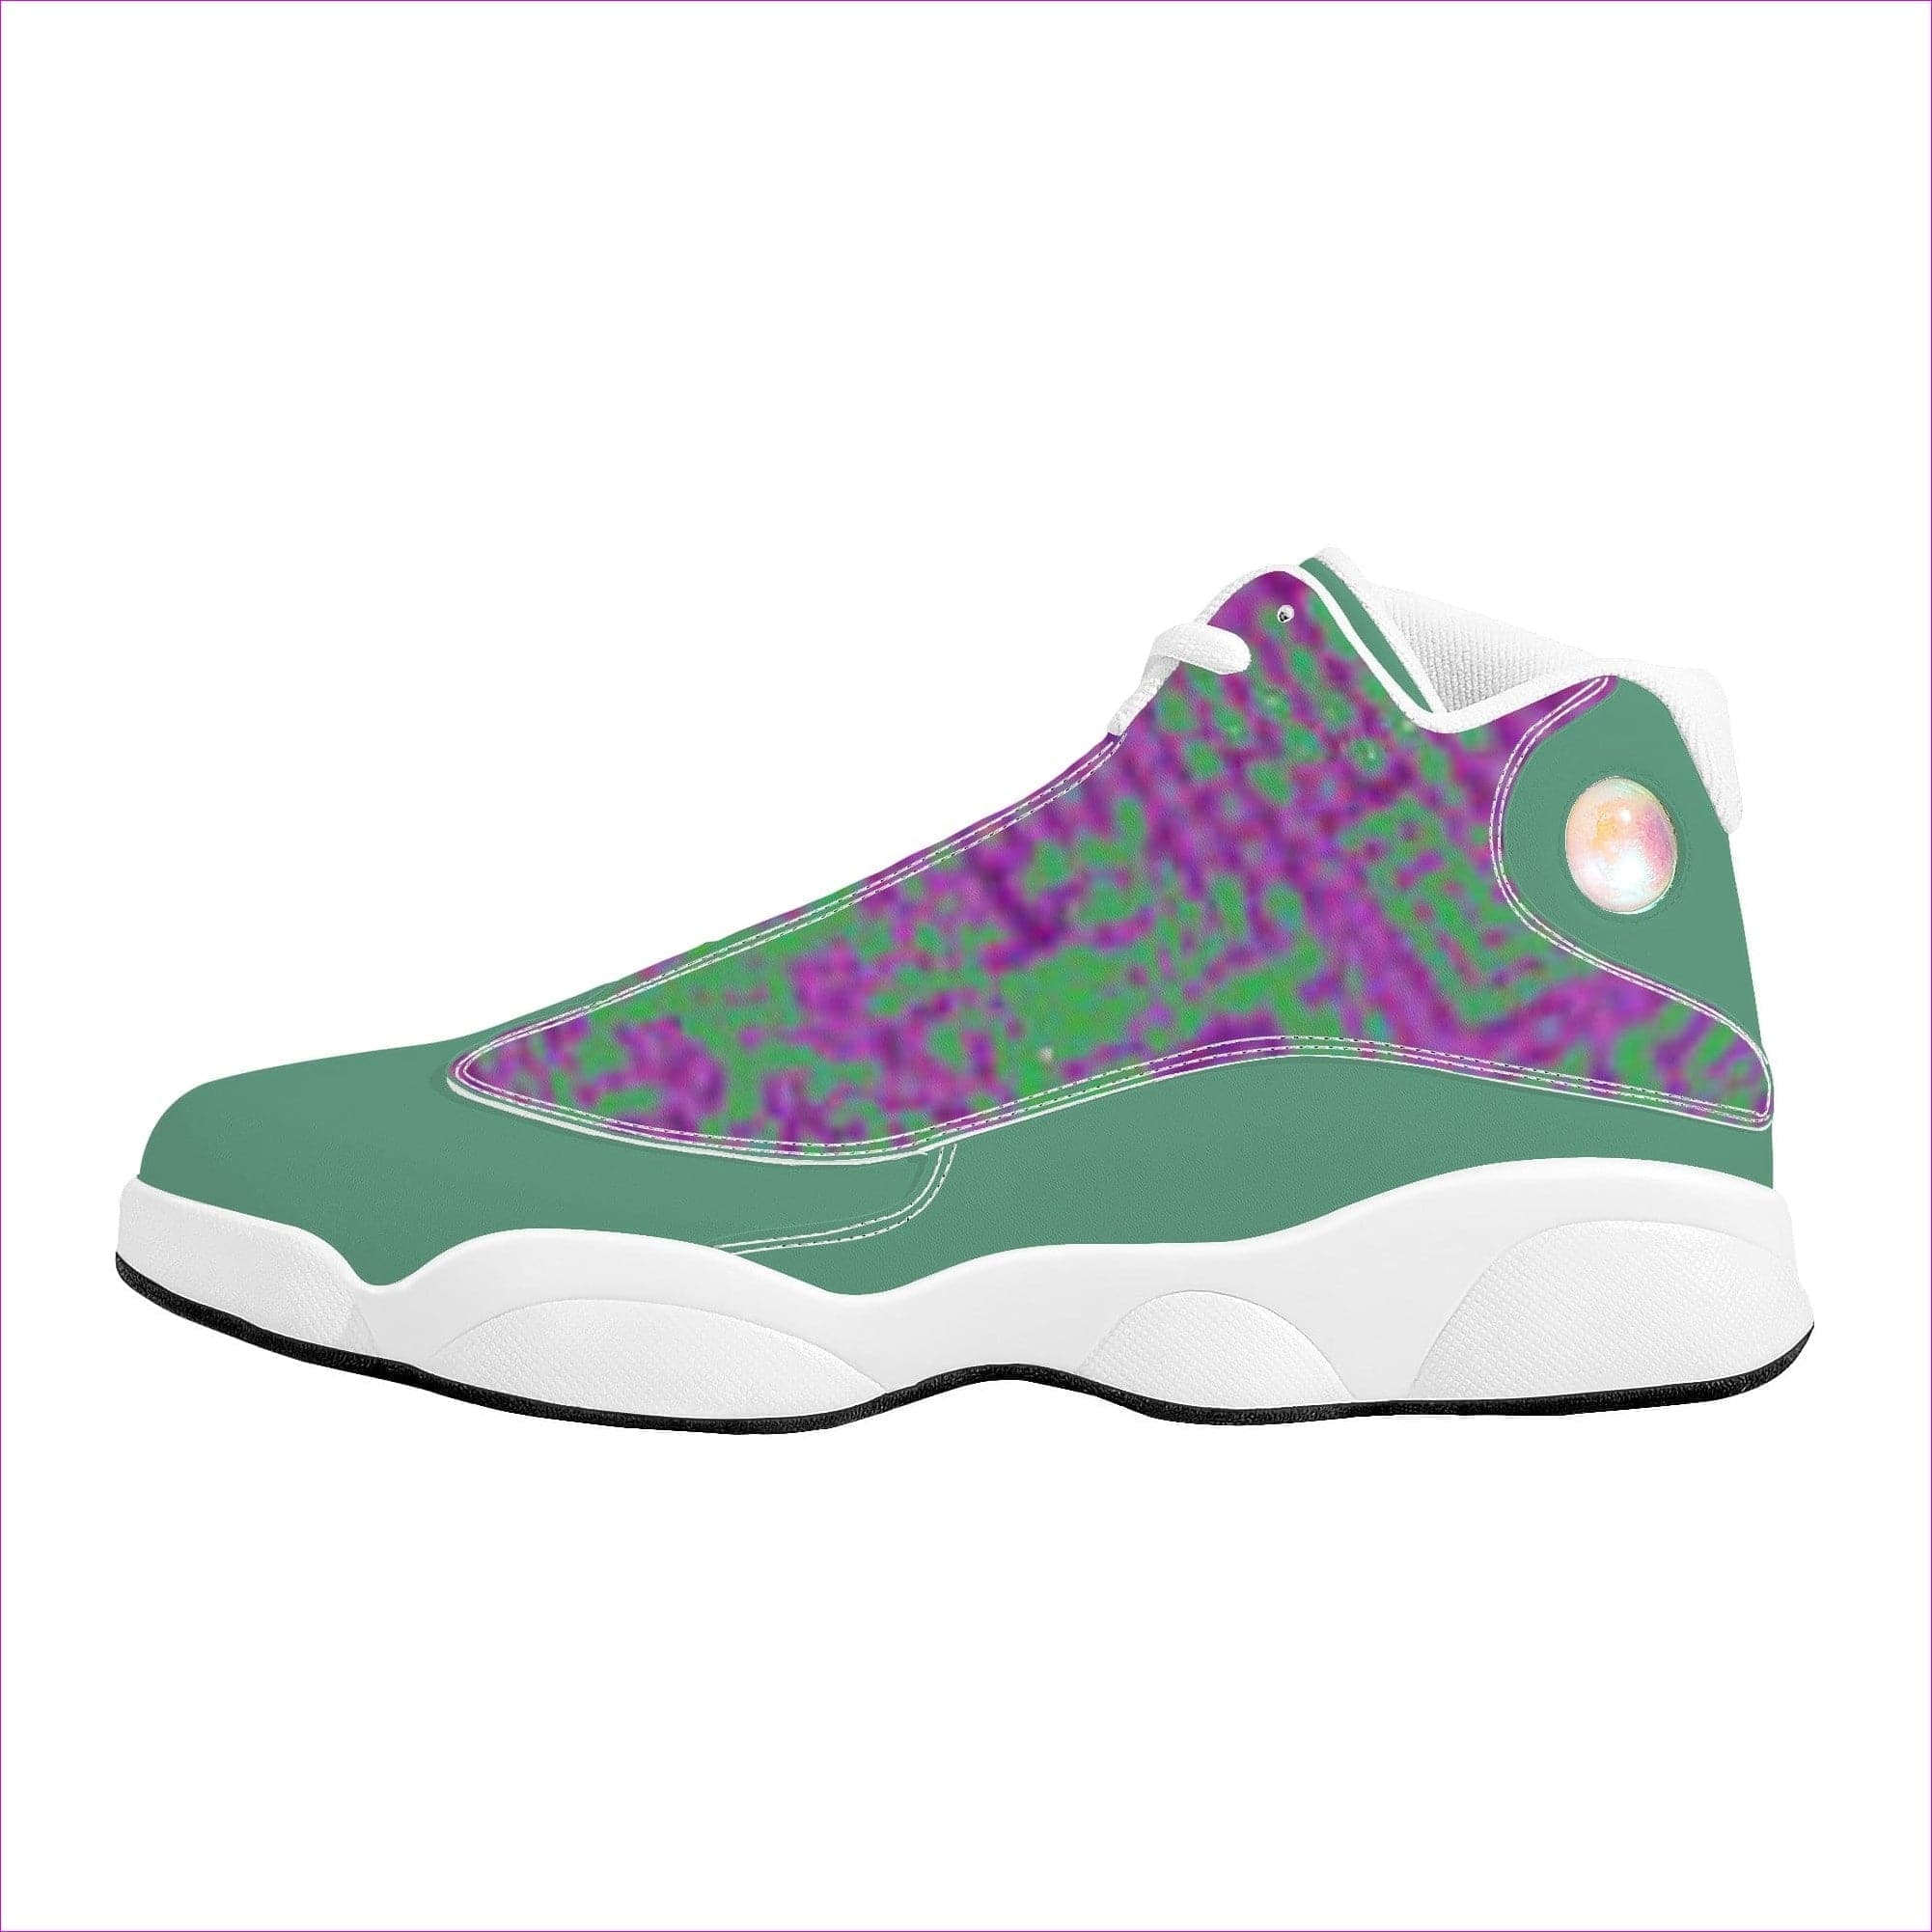 Chameleon Snake Basketball Shoes - unisex basketball shoes at TFC&H Co.